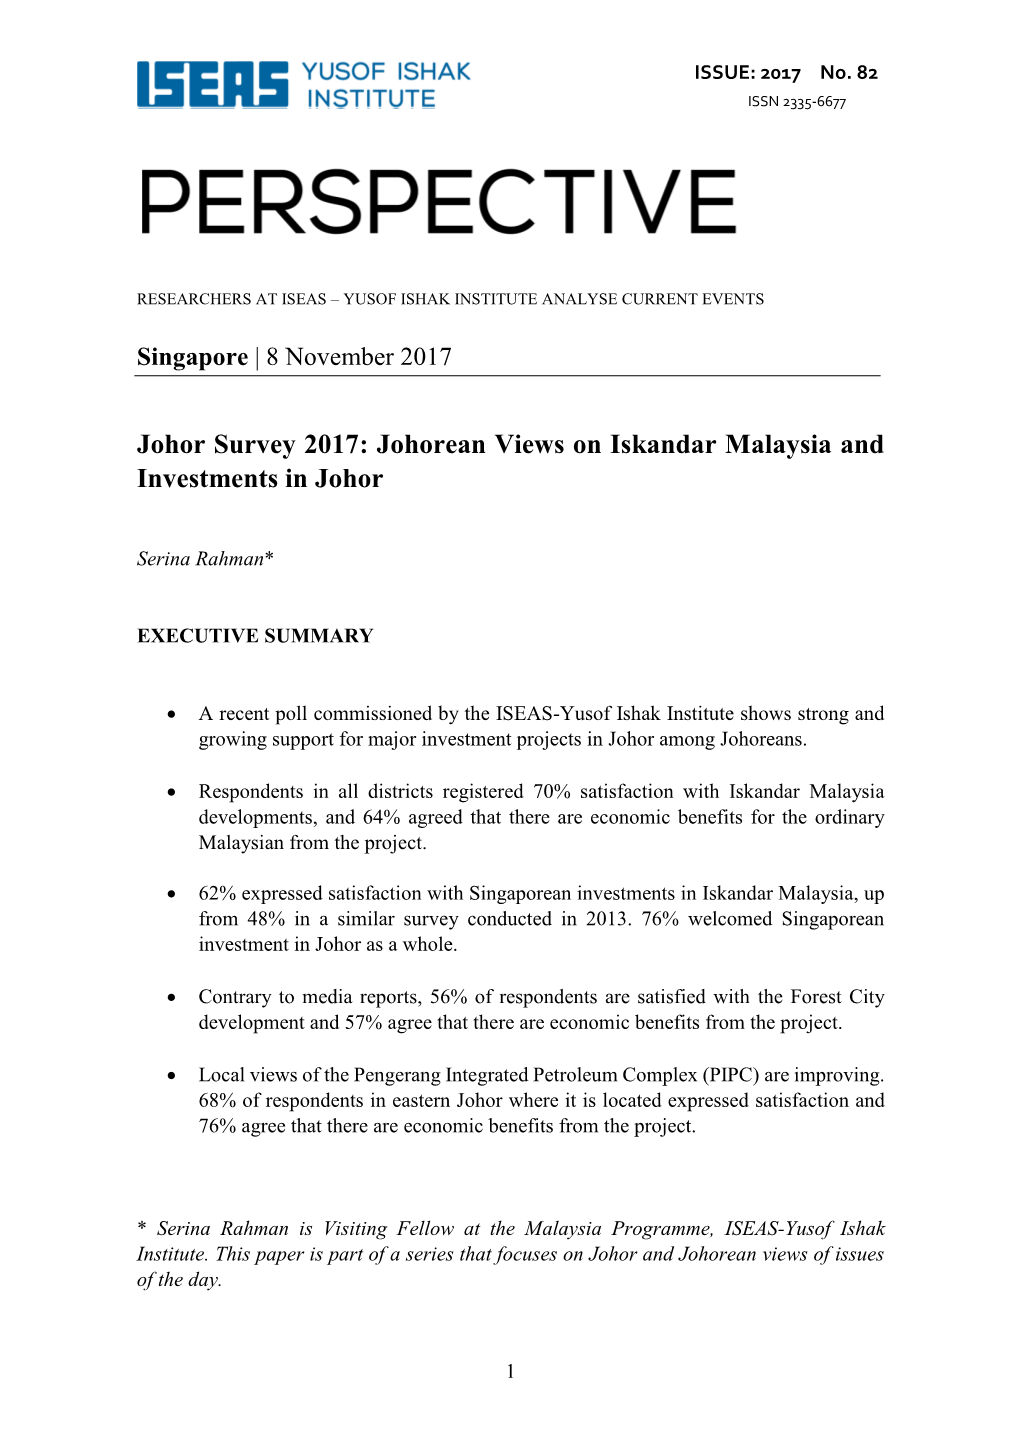 Johorean Views on Iskandar Malaysia and Investments in Johor